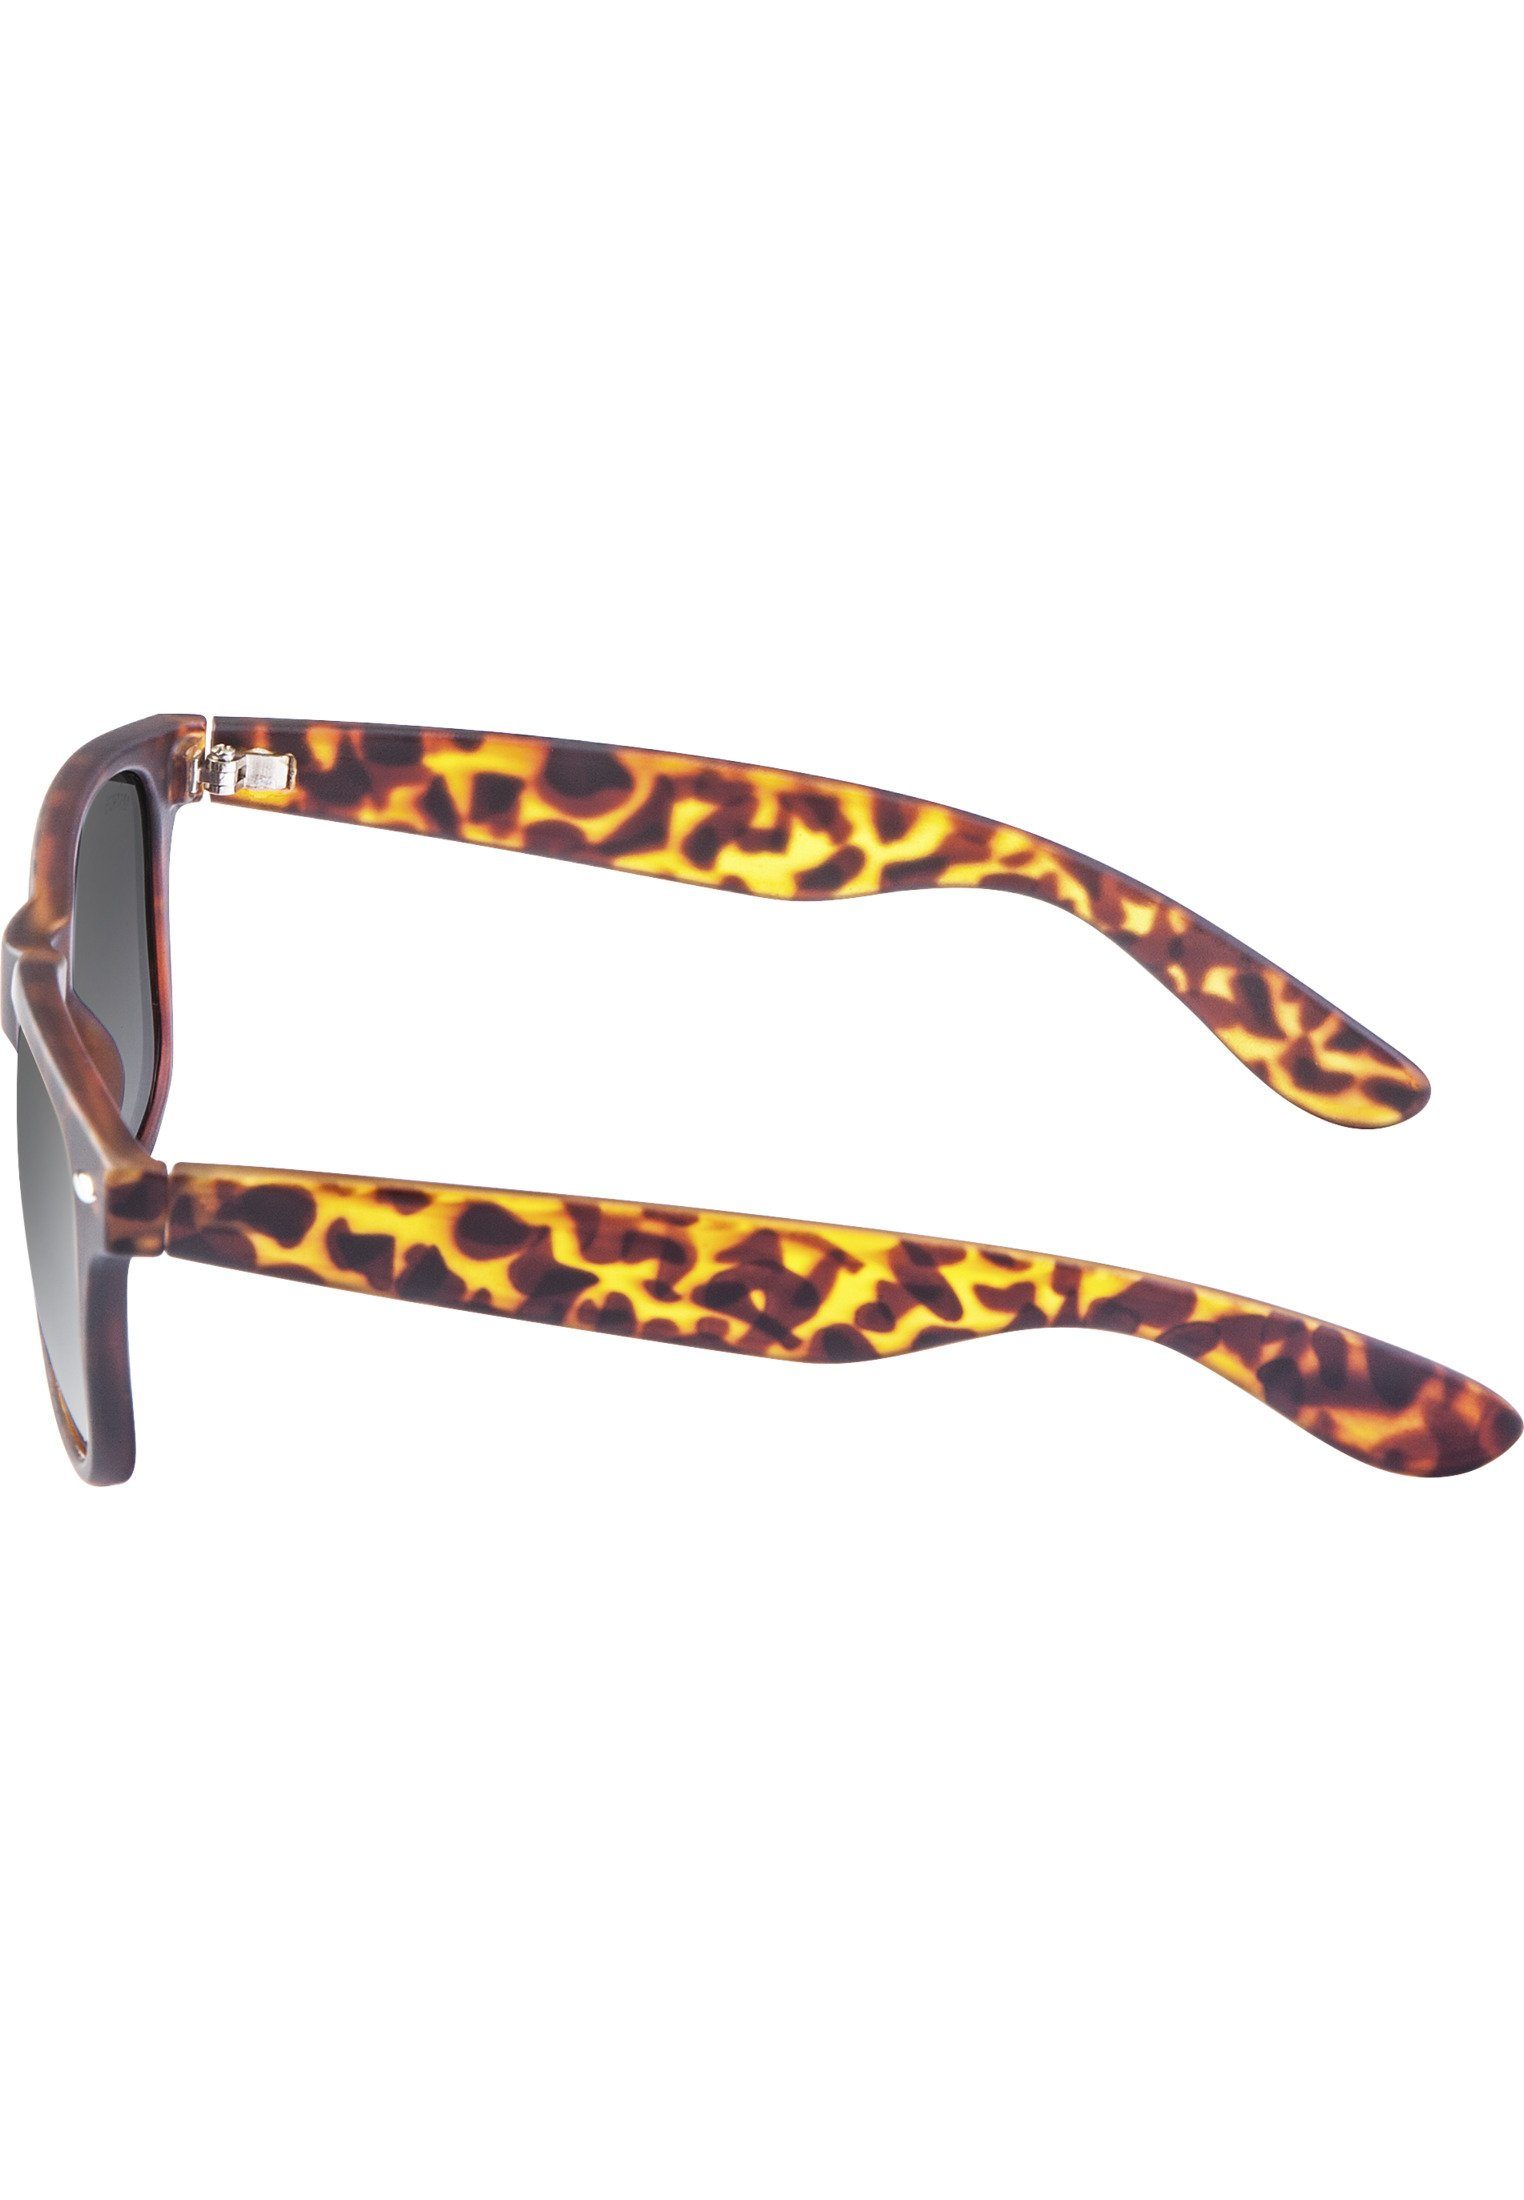 MSTRDS Sonnenbrille Accessoires Sunglasses havanna/grey Likoma Youth